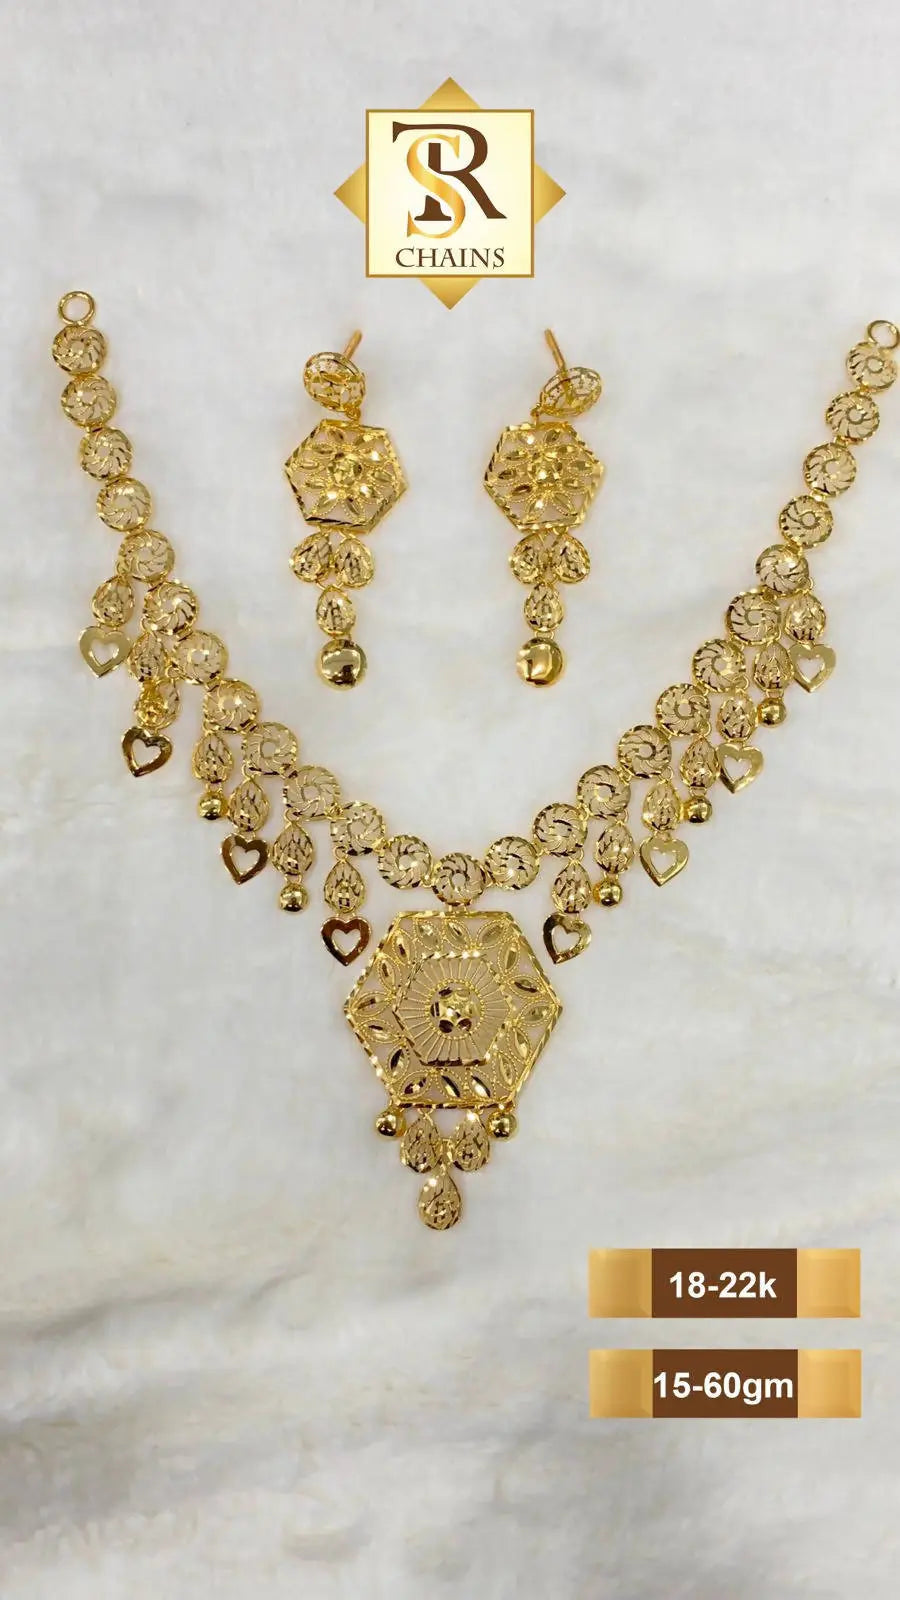 Turkish Necklace Sarafa Bazar India